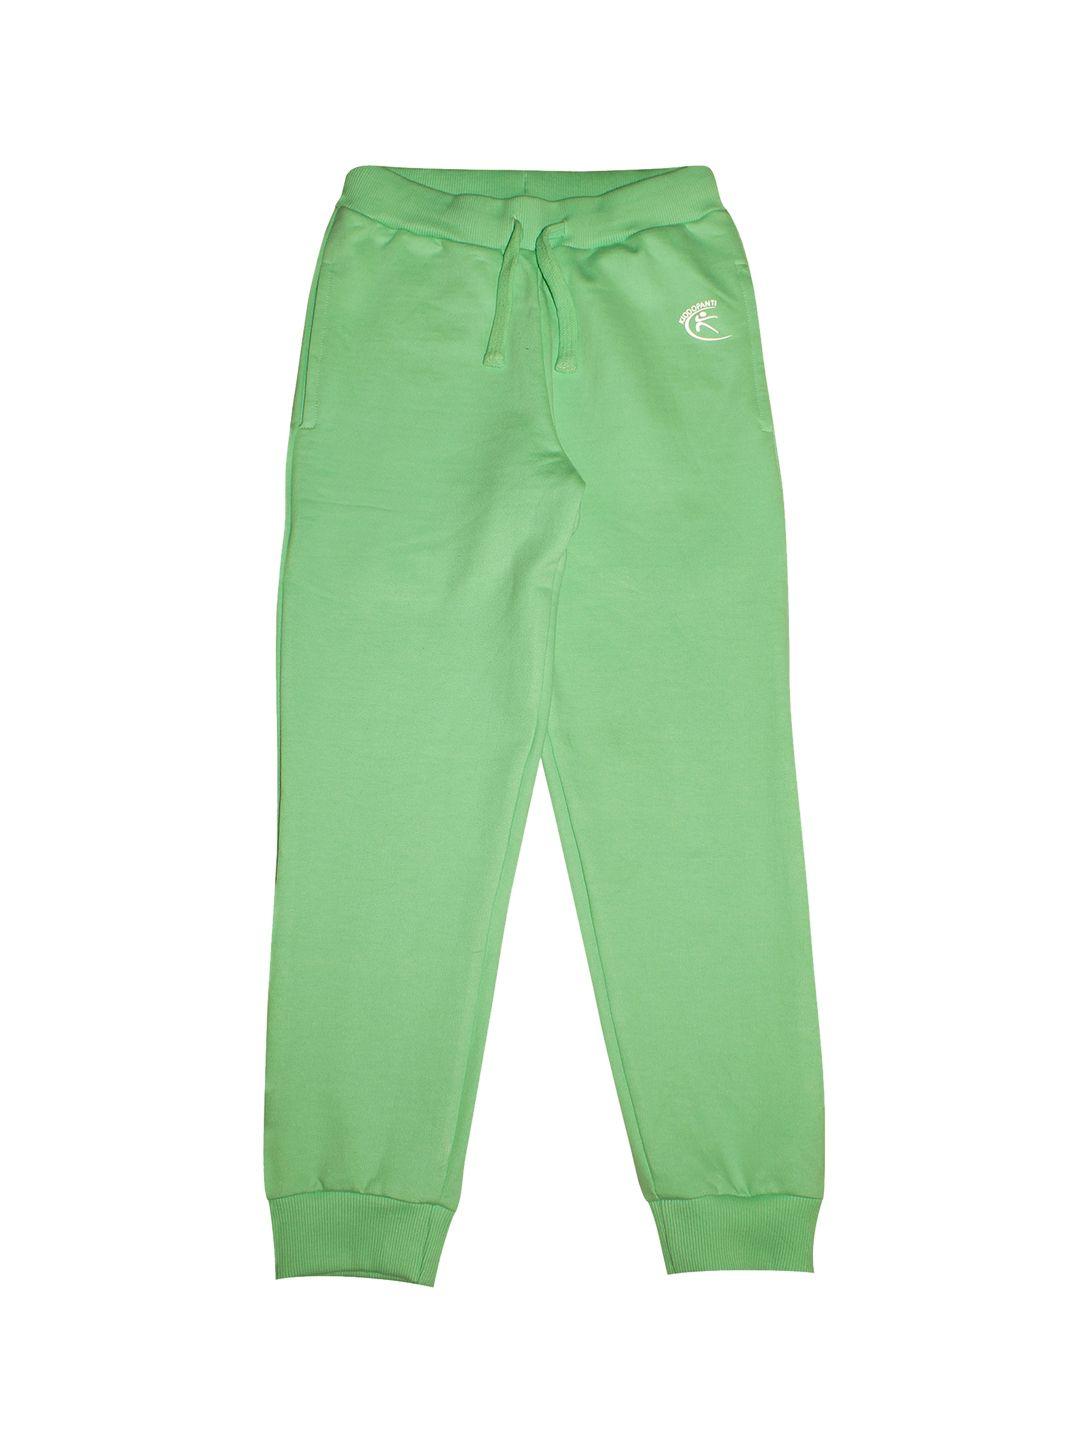 kiddopanti unisex kids green solid pure cotton joggers